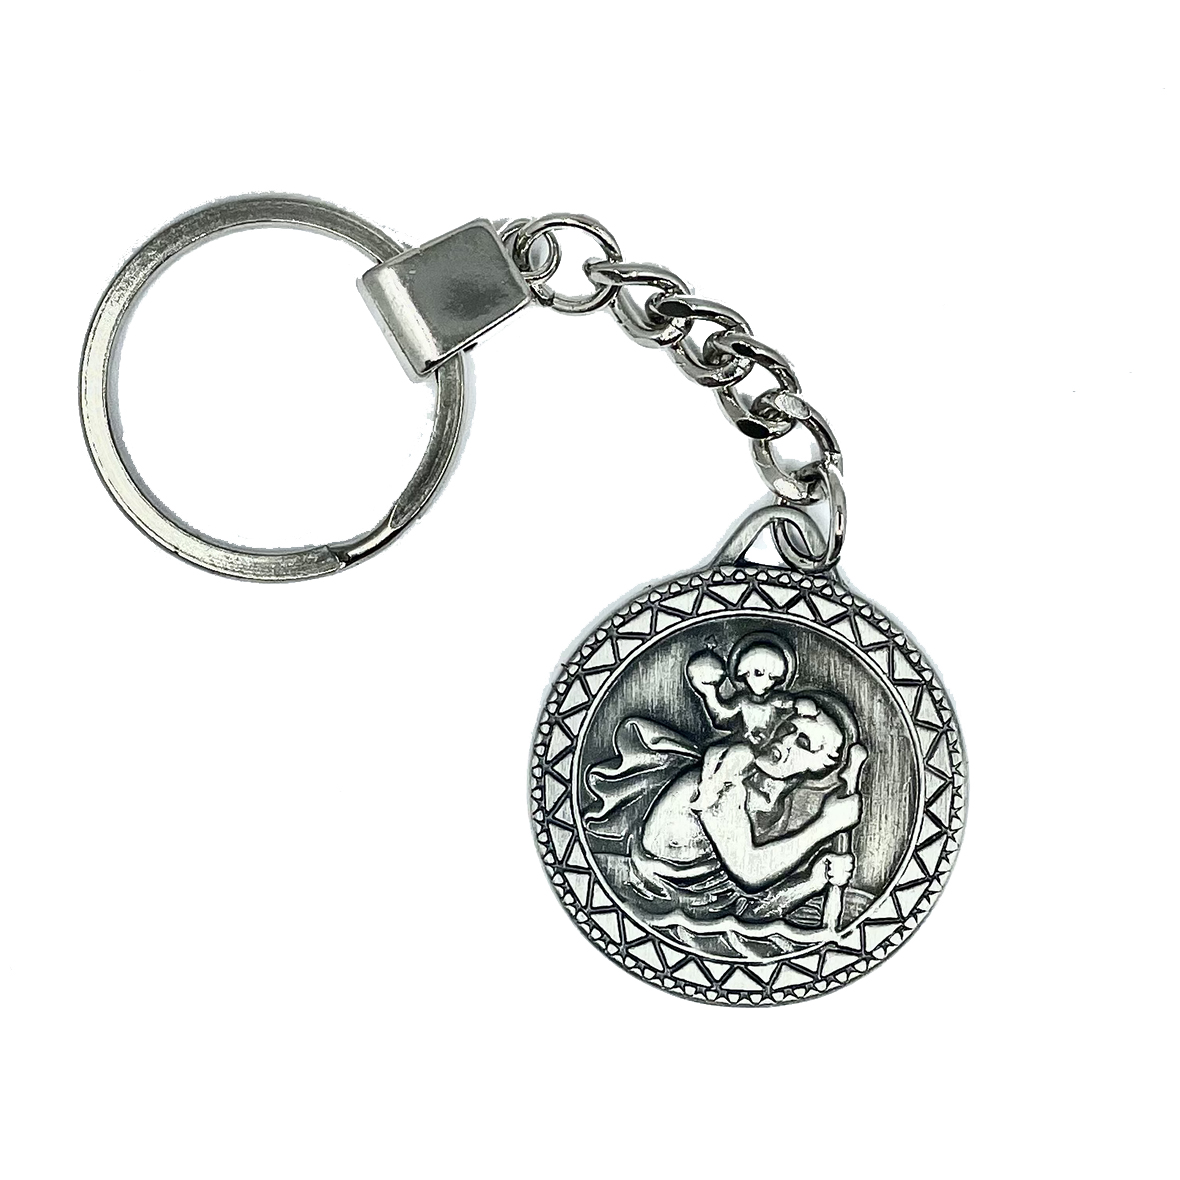 St. Christopher key chain